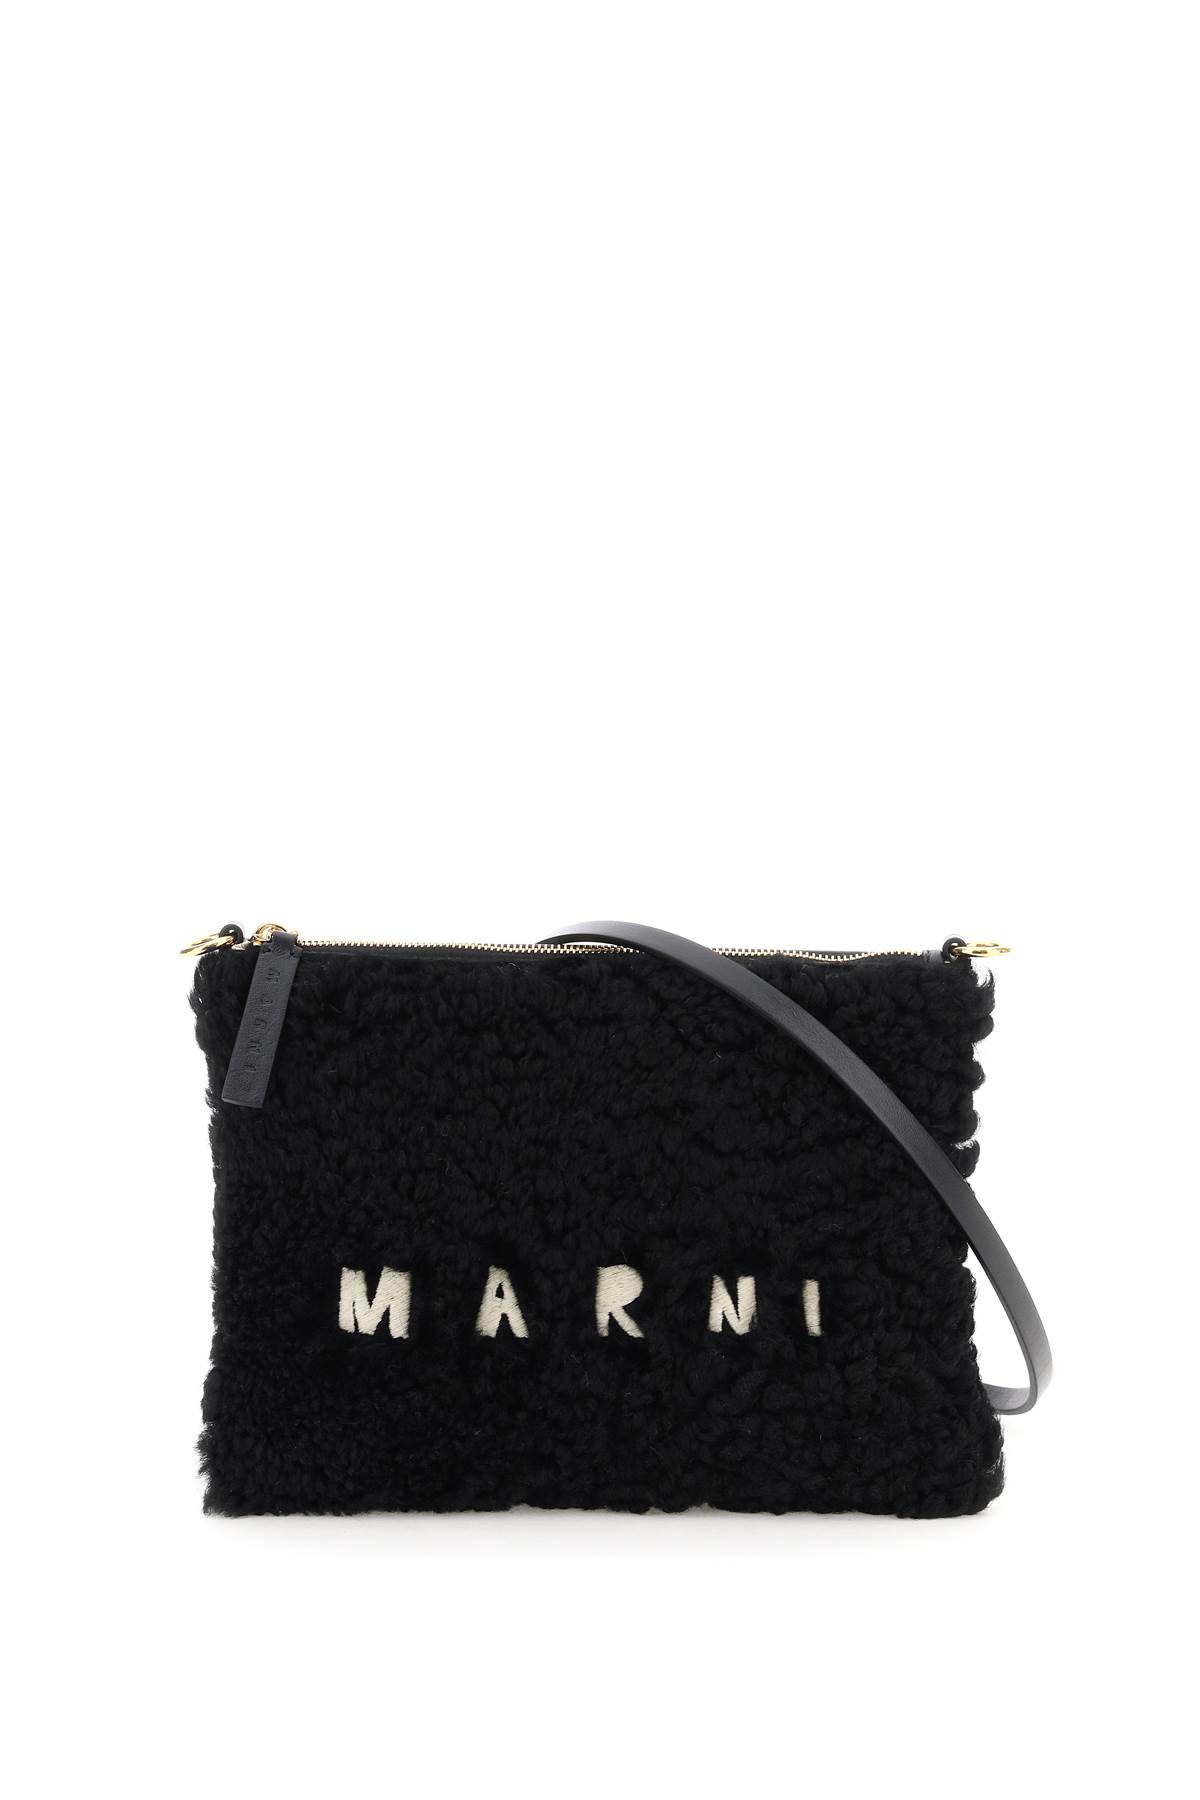 Marni Flat Crossbody Bag